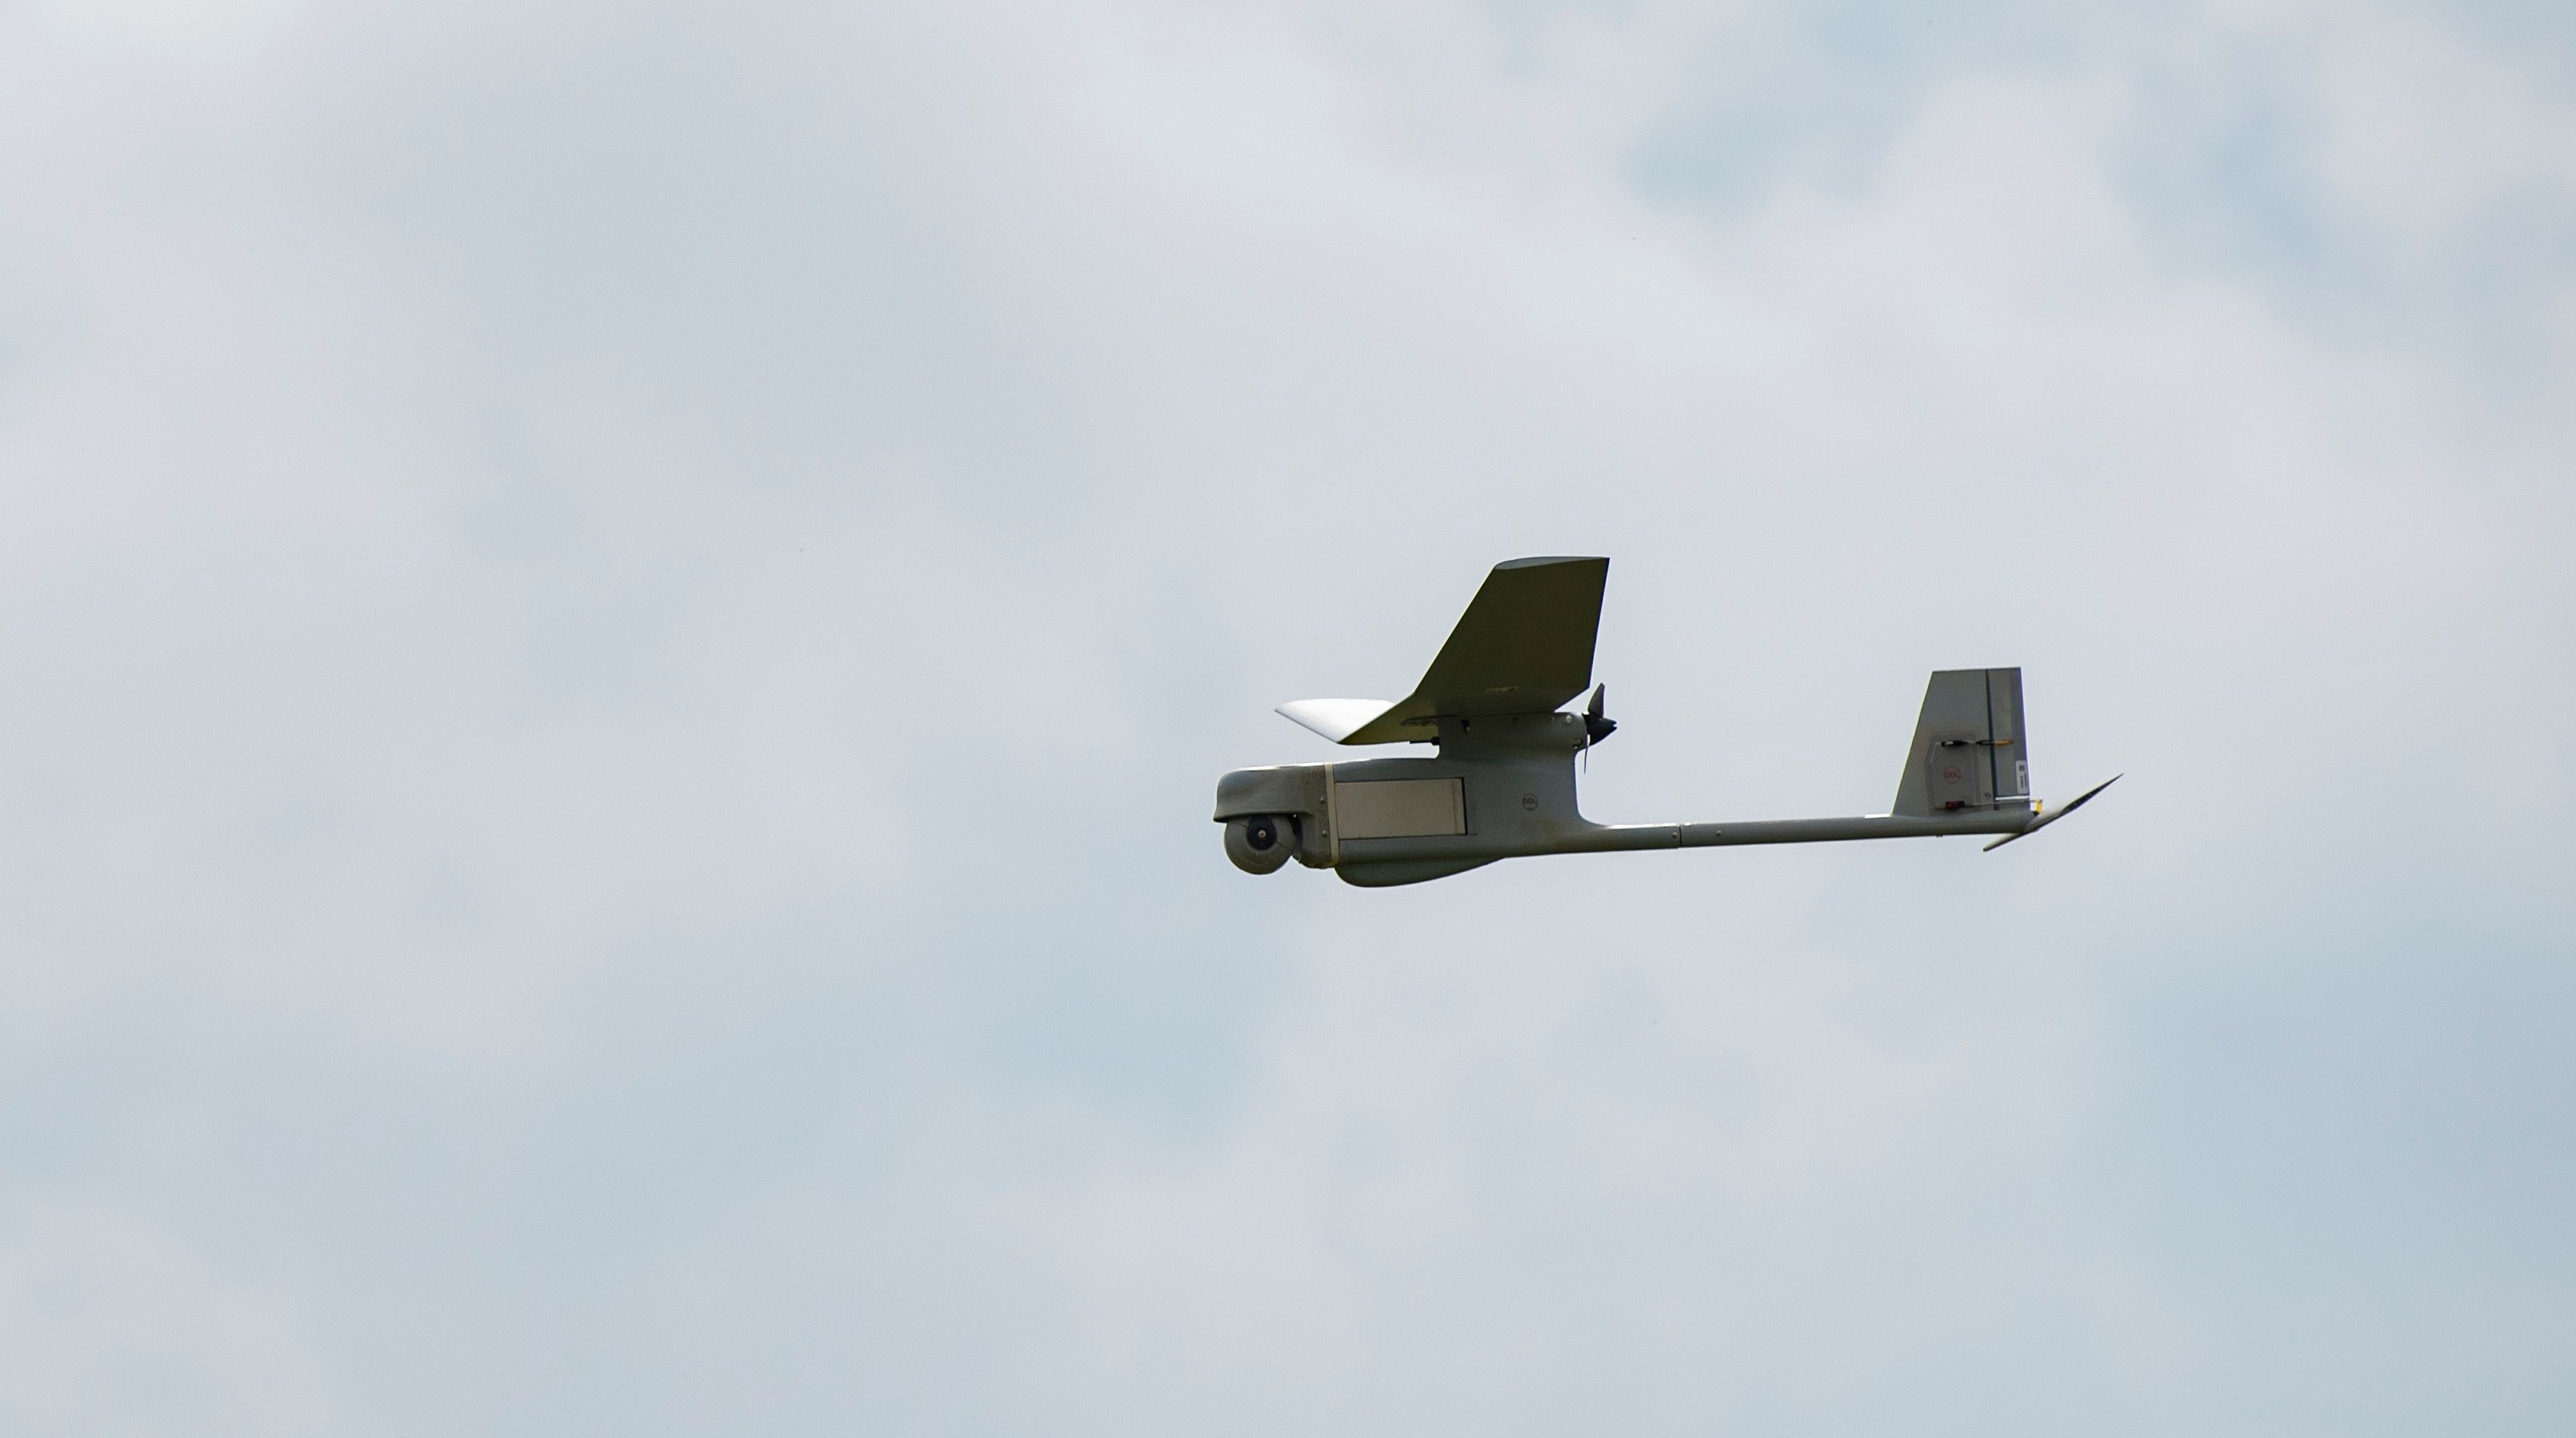 RQ-11 Raven small US military recon drone